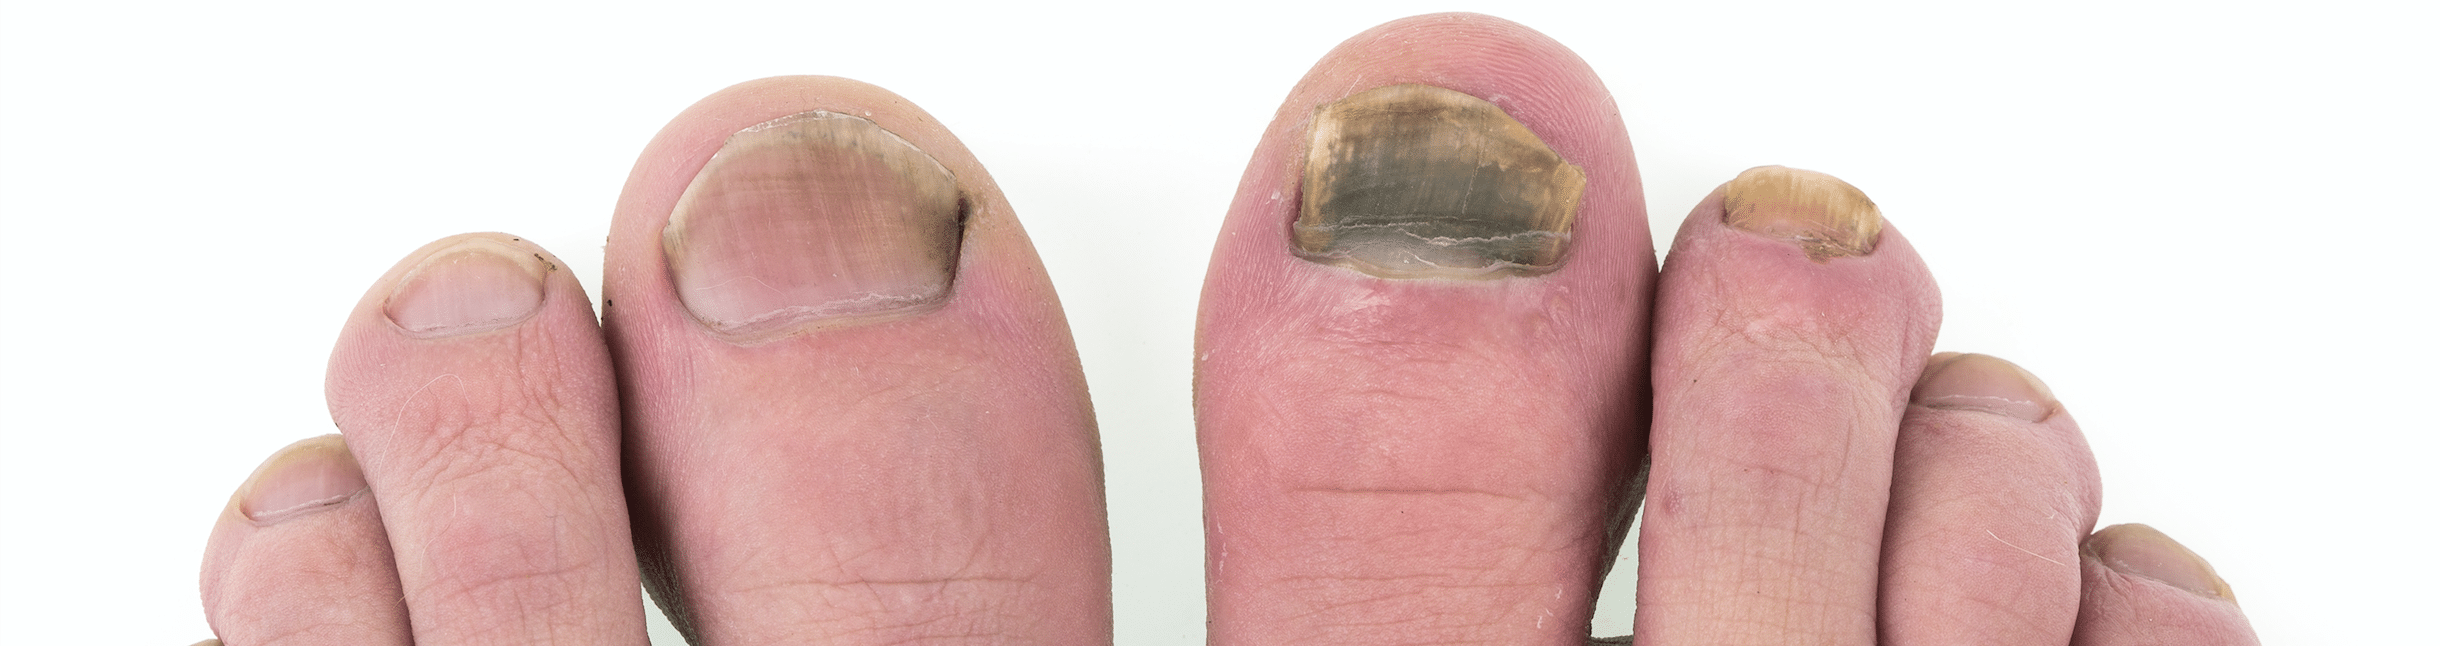 Close-up of fungal and ingrown toenails